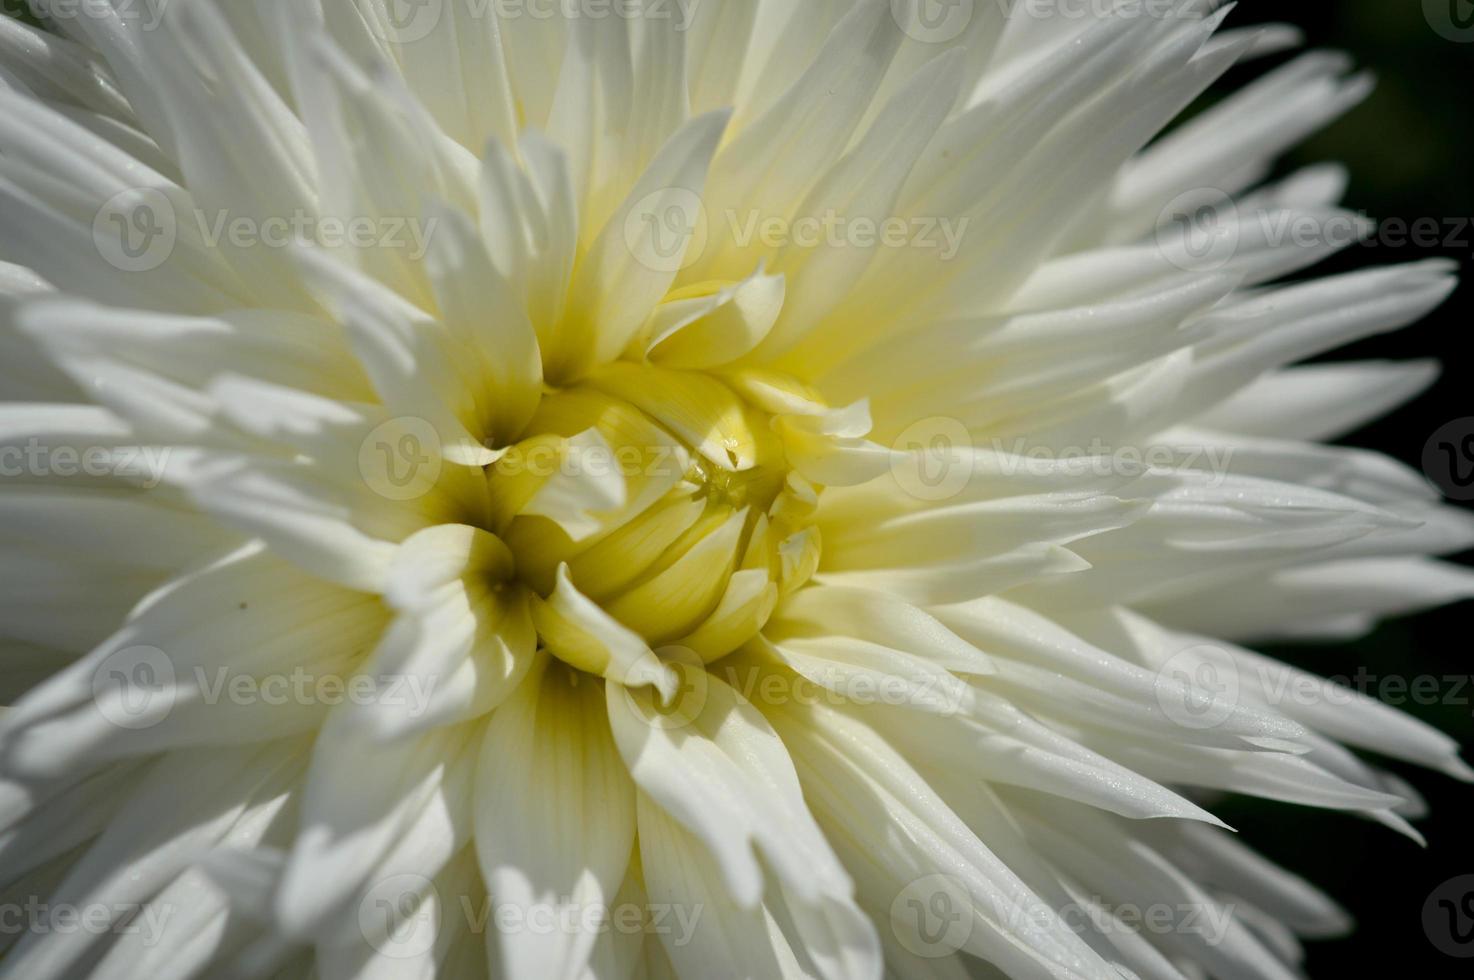 flor branca dália close-up, pétalas, flor branca do jardim 14953205 Foto de  stock no Vecteezy